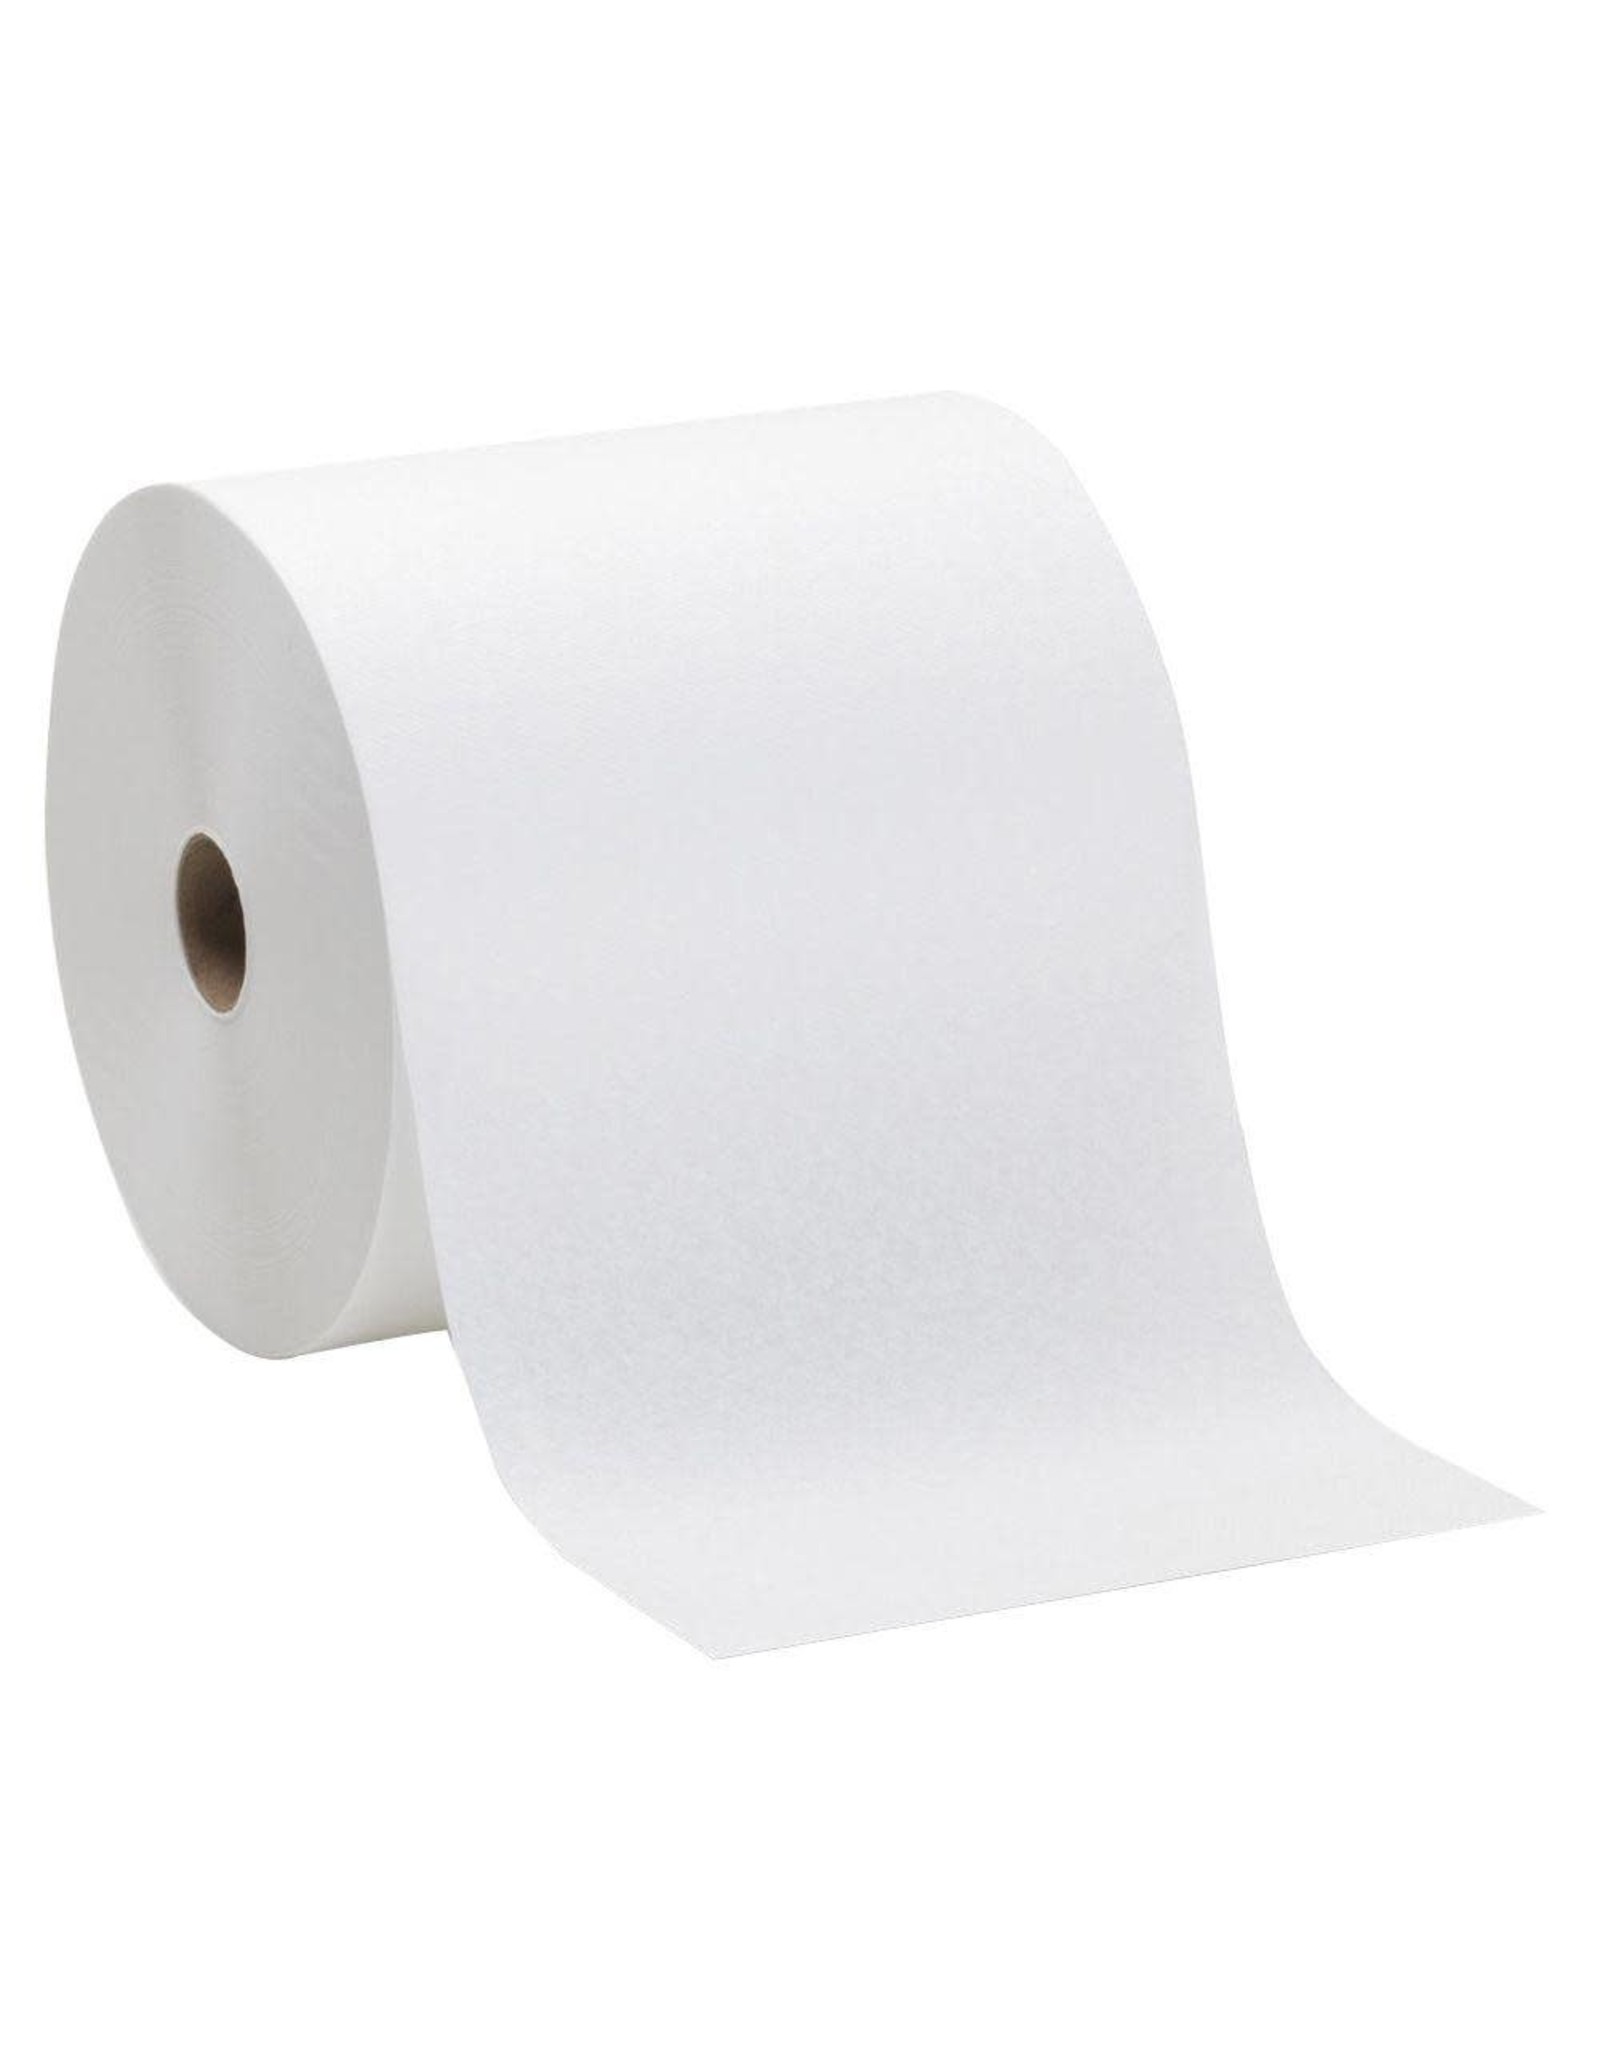 Evolv White Roll Towel, 6 x 800'